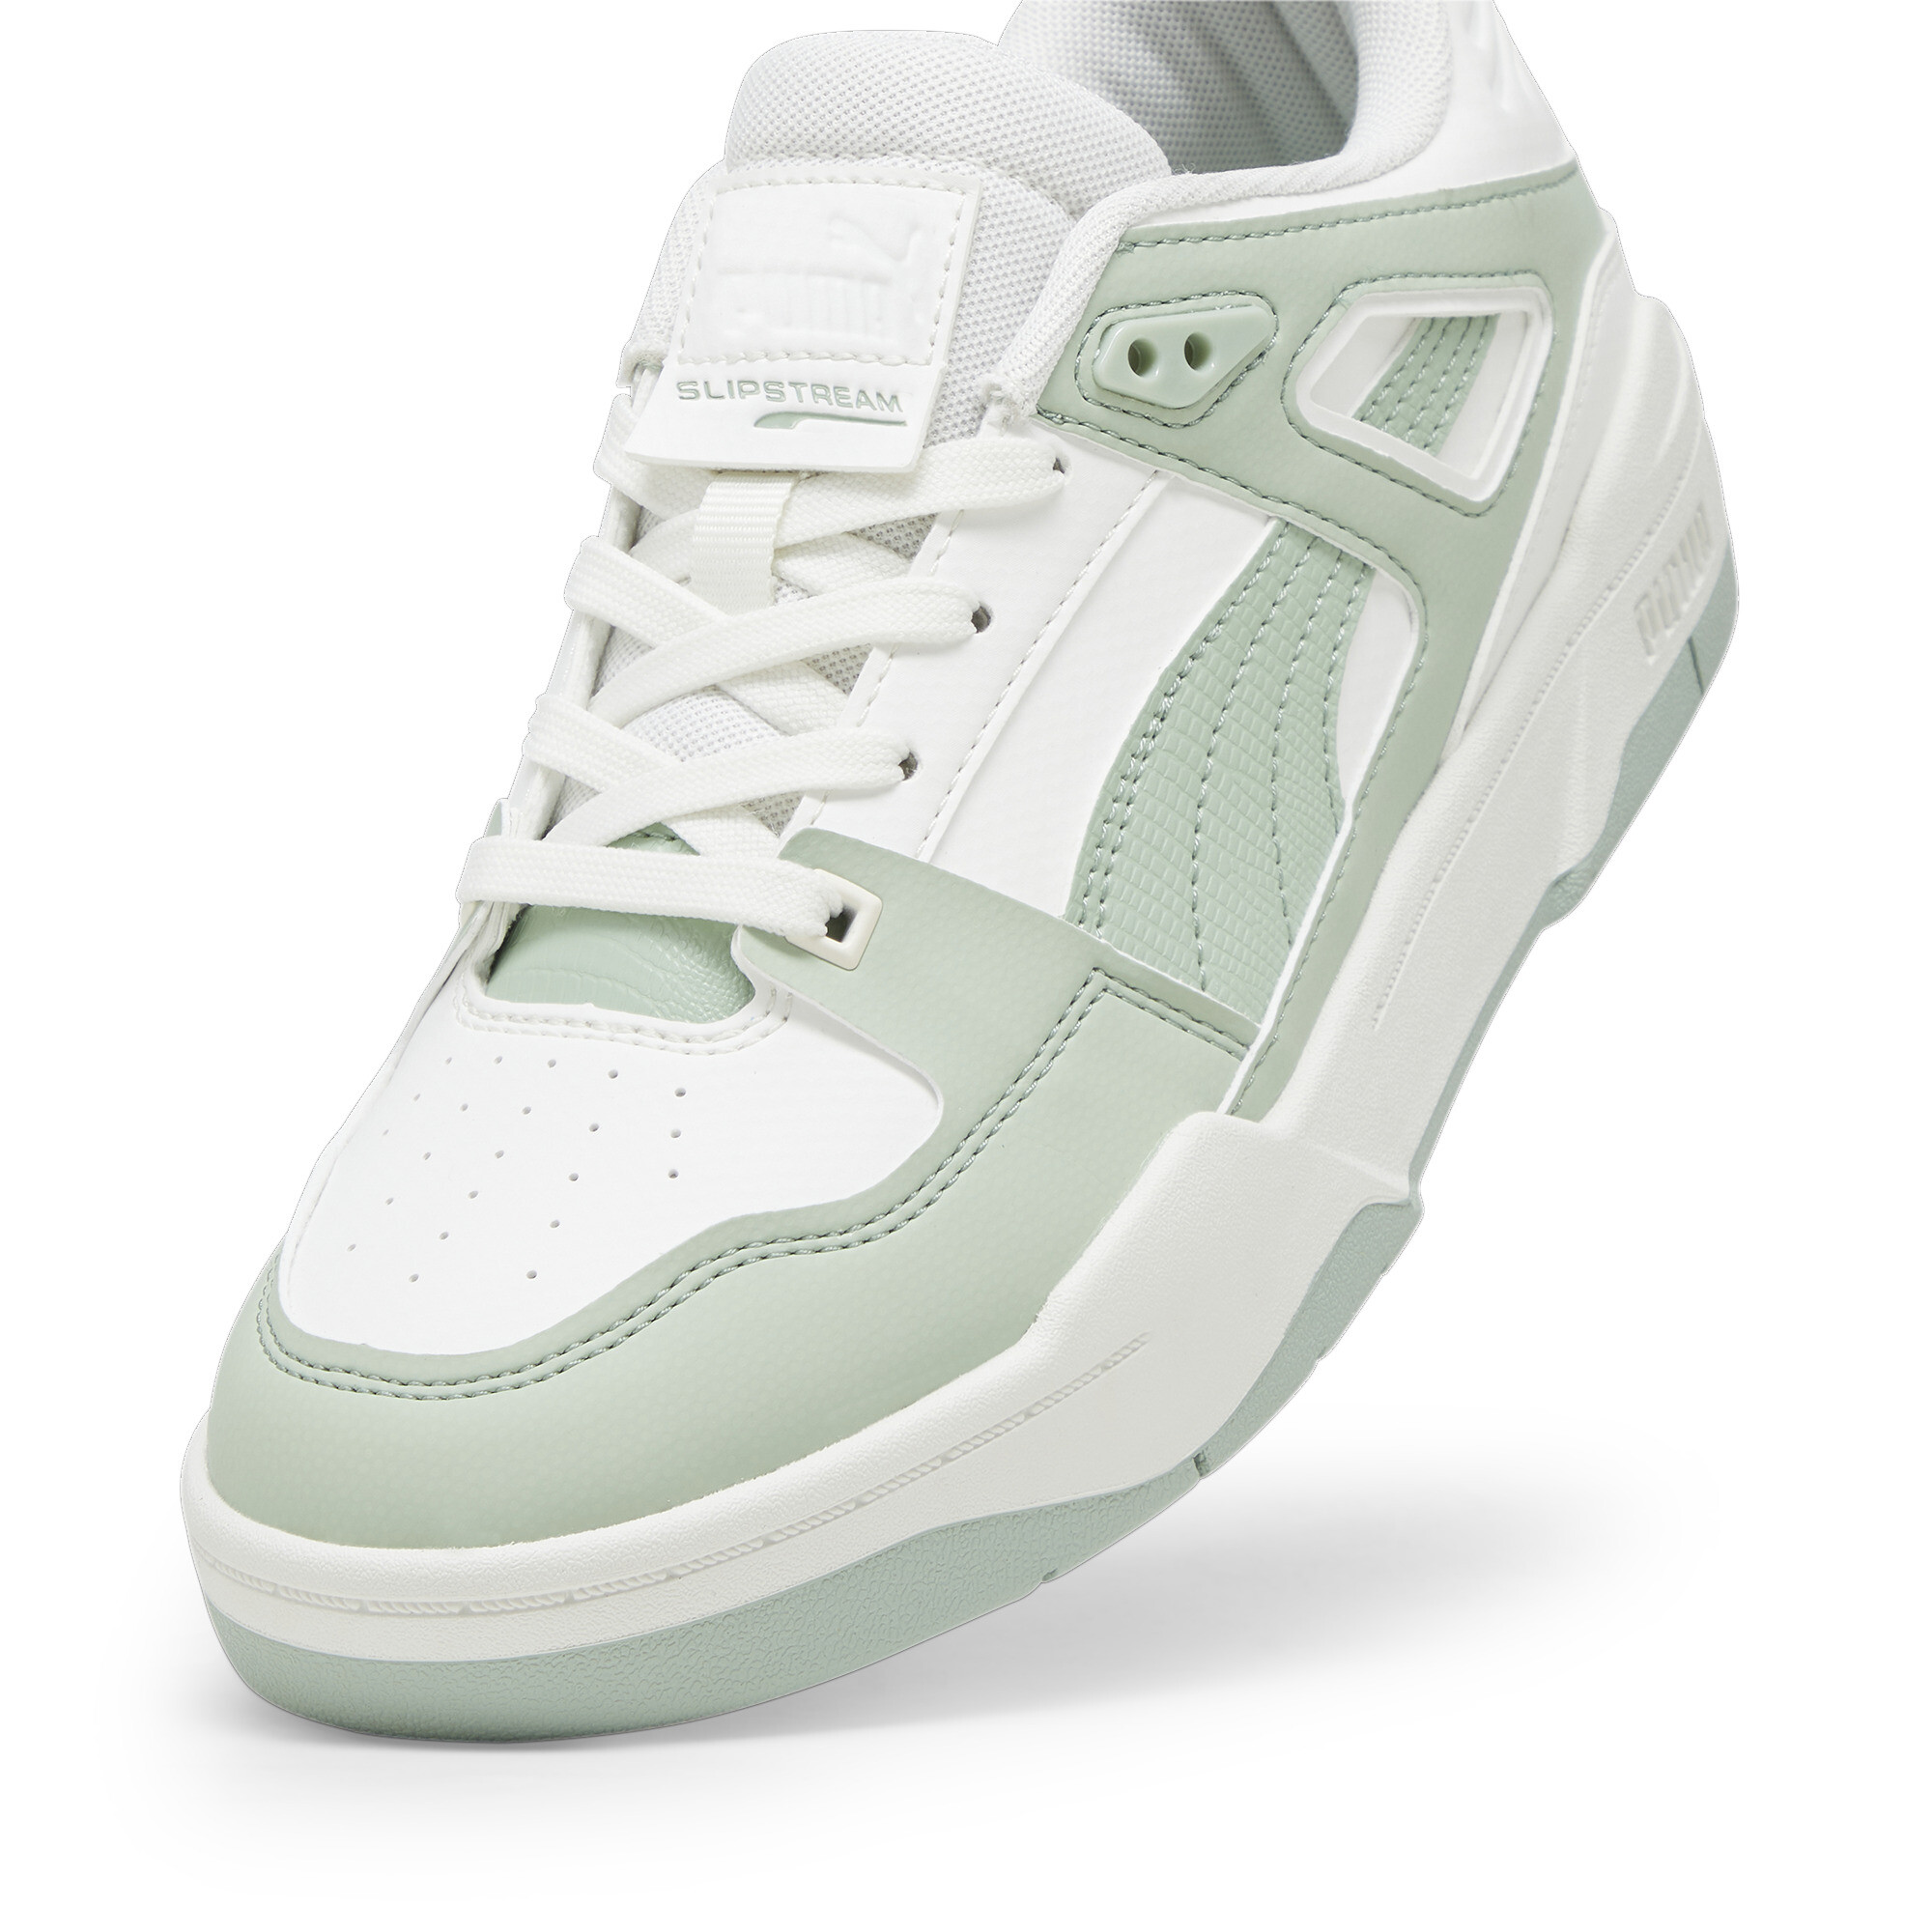 Women's Puma Slipstream Deboss's Sneakers, Green, Size 41, Shoes